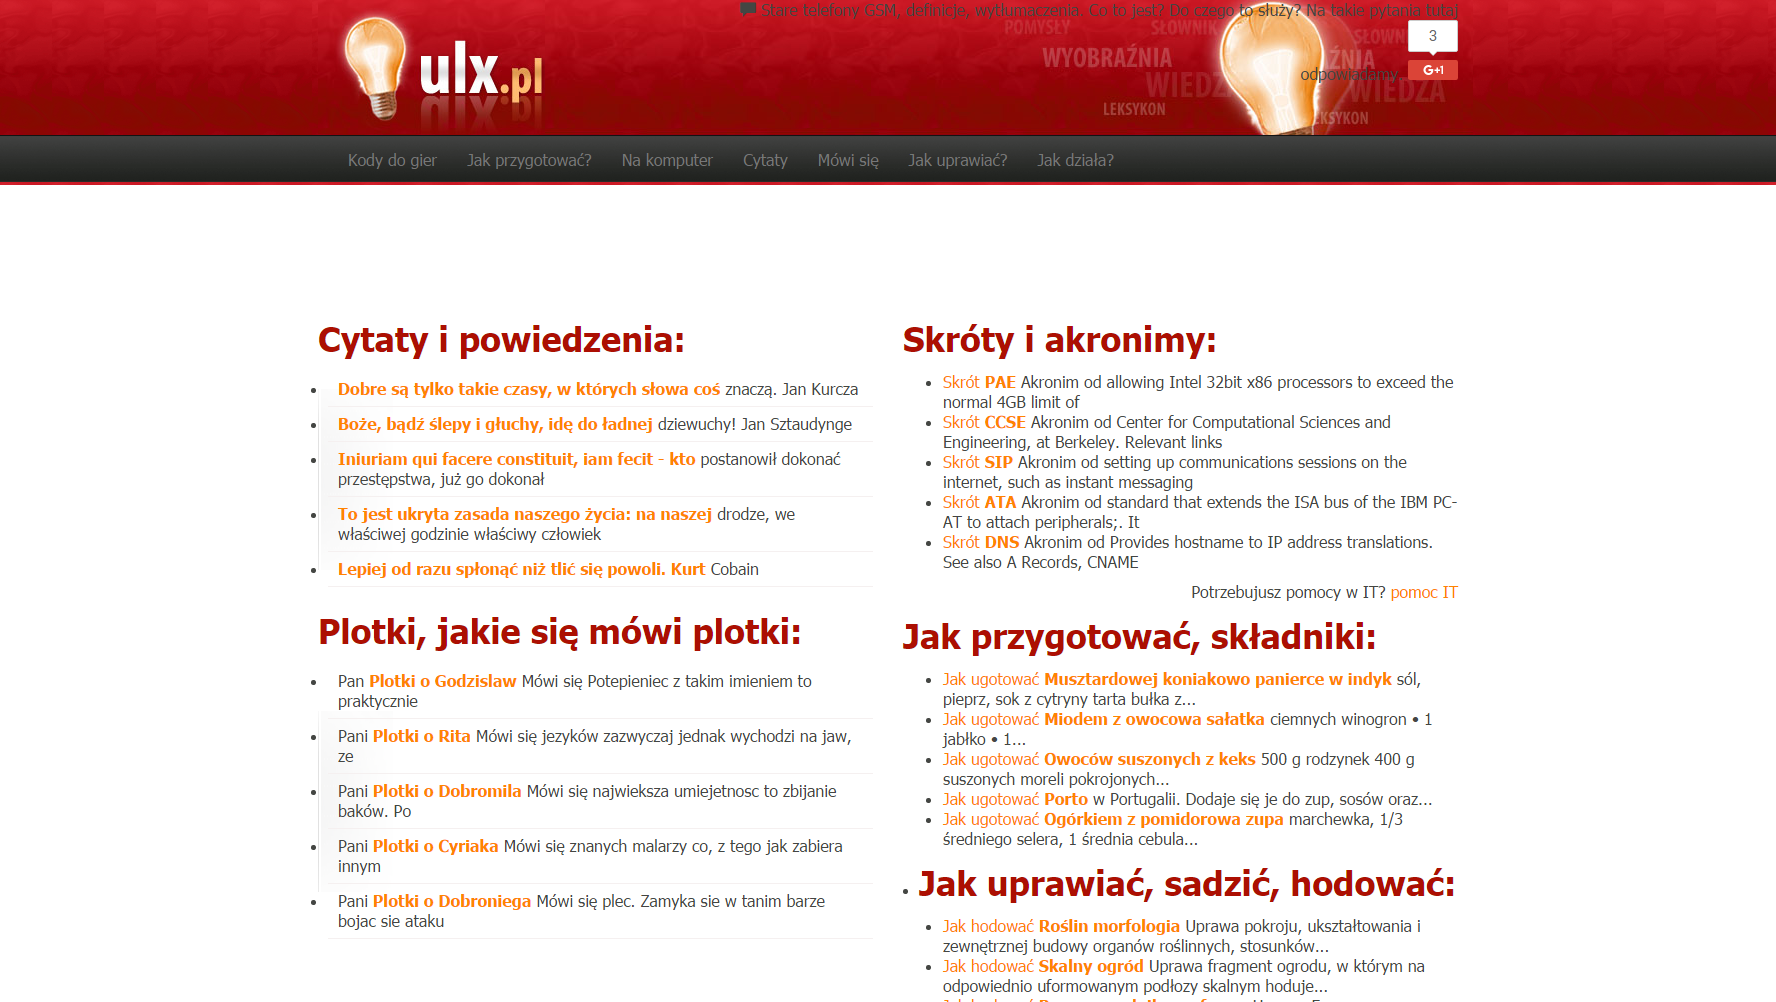 Projekt ULX.pl